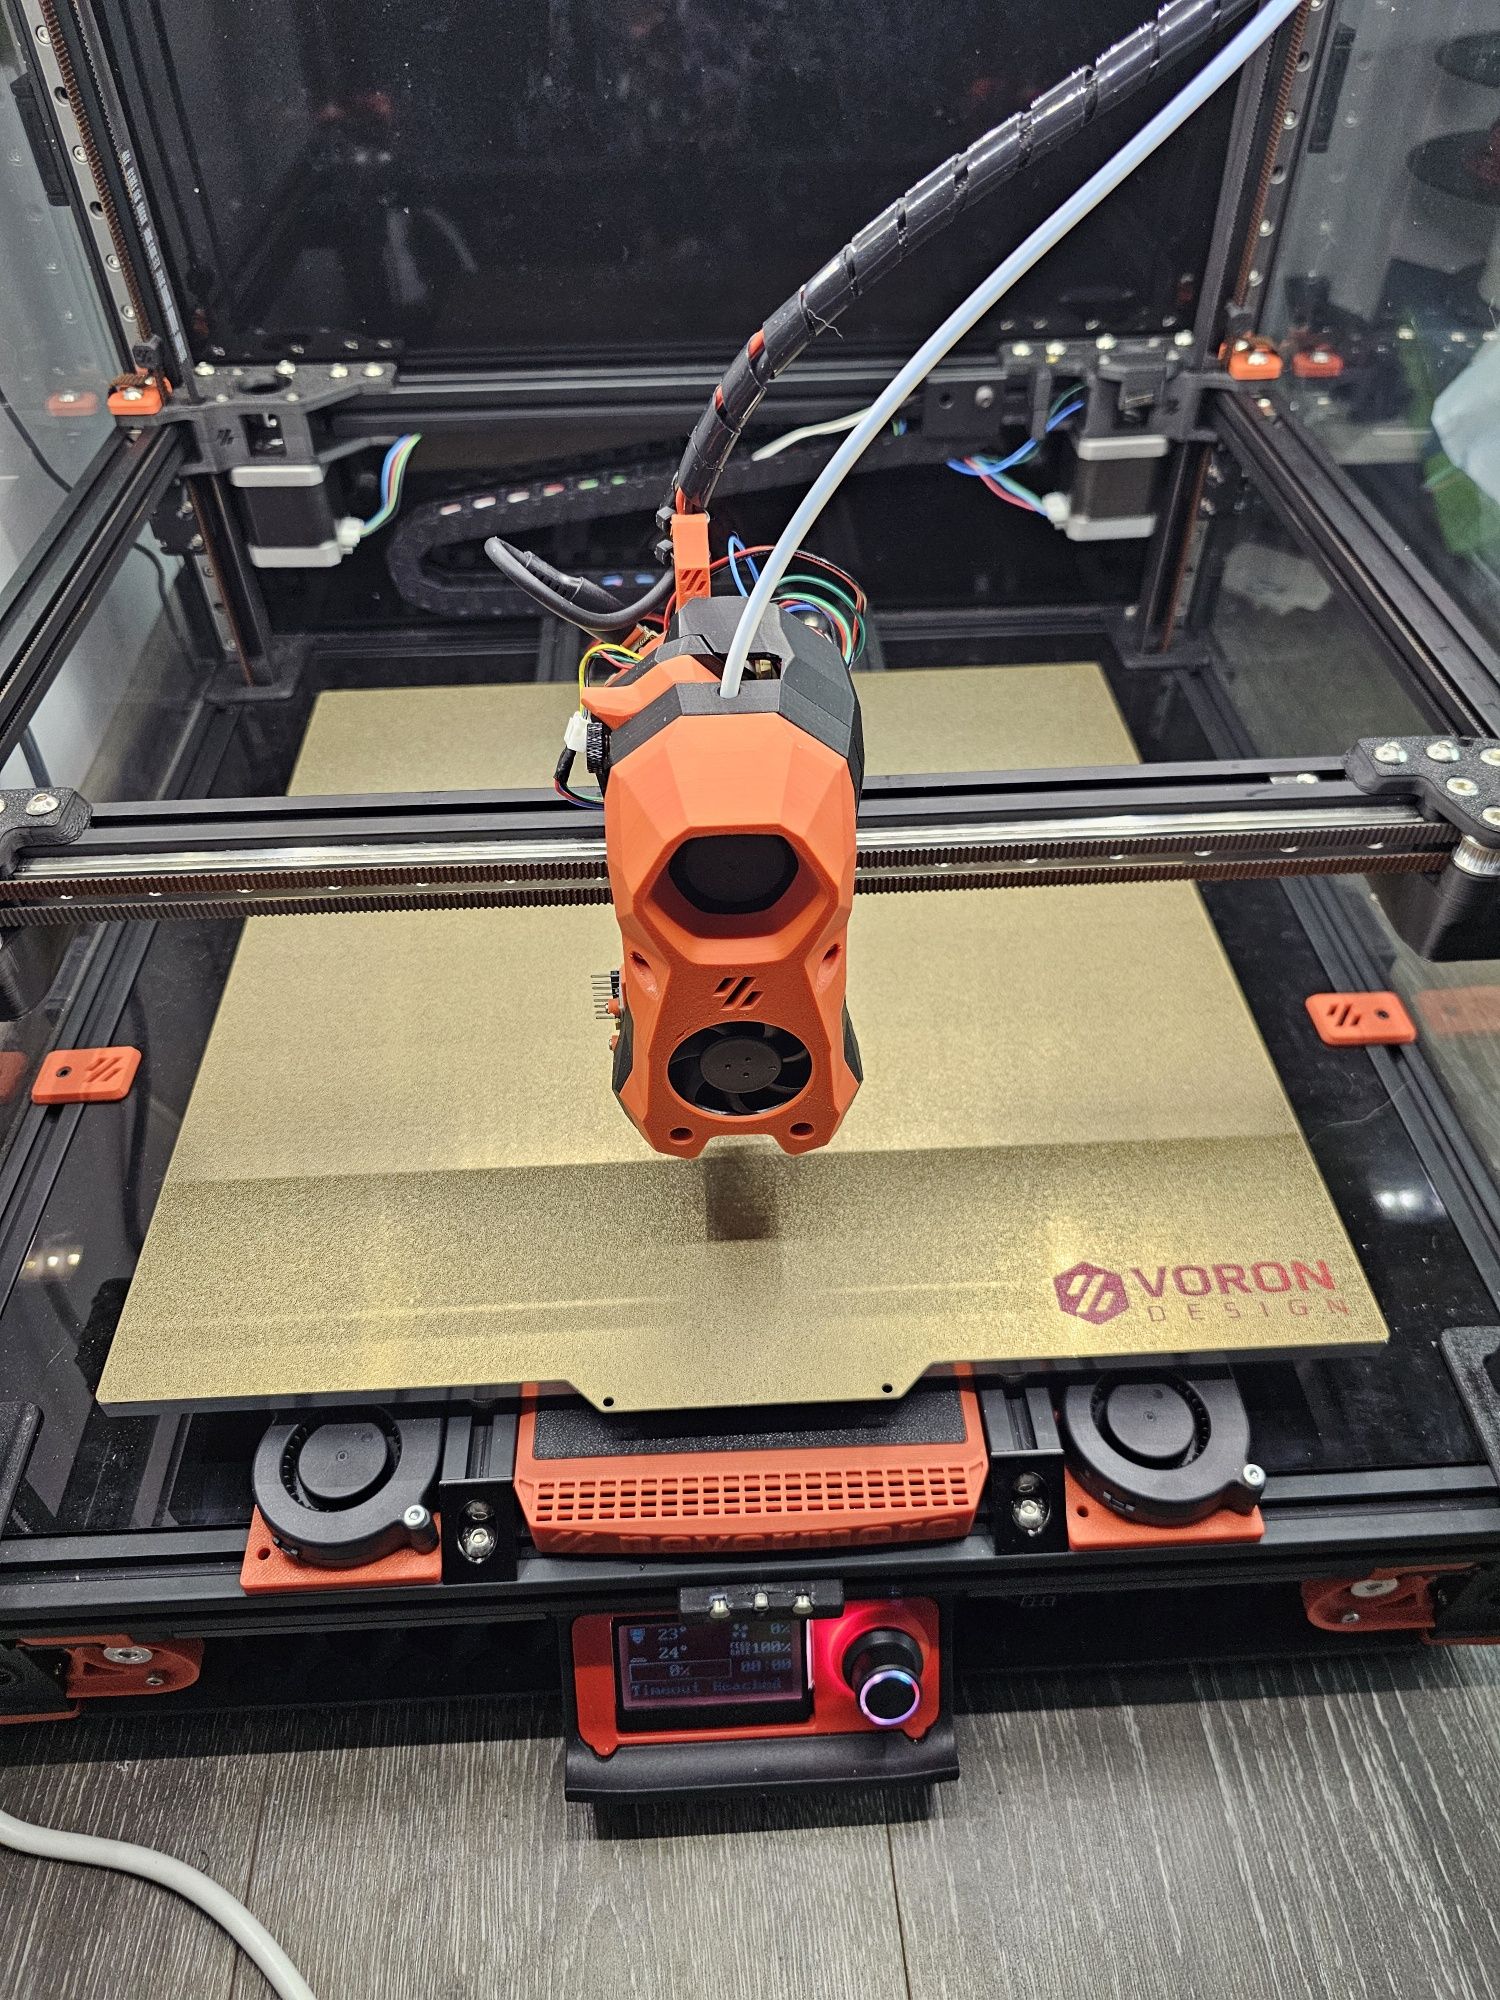 Imprimanta 3D voron 2.4 350x350x350